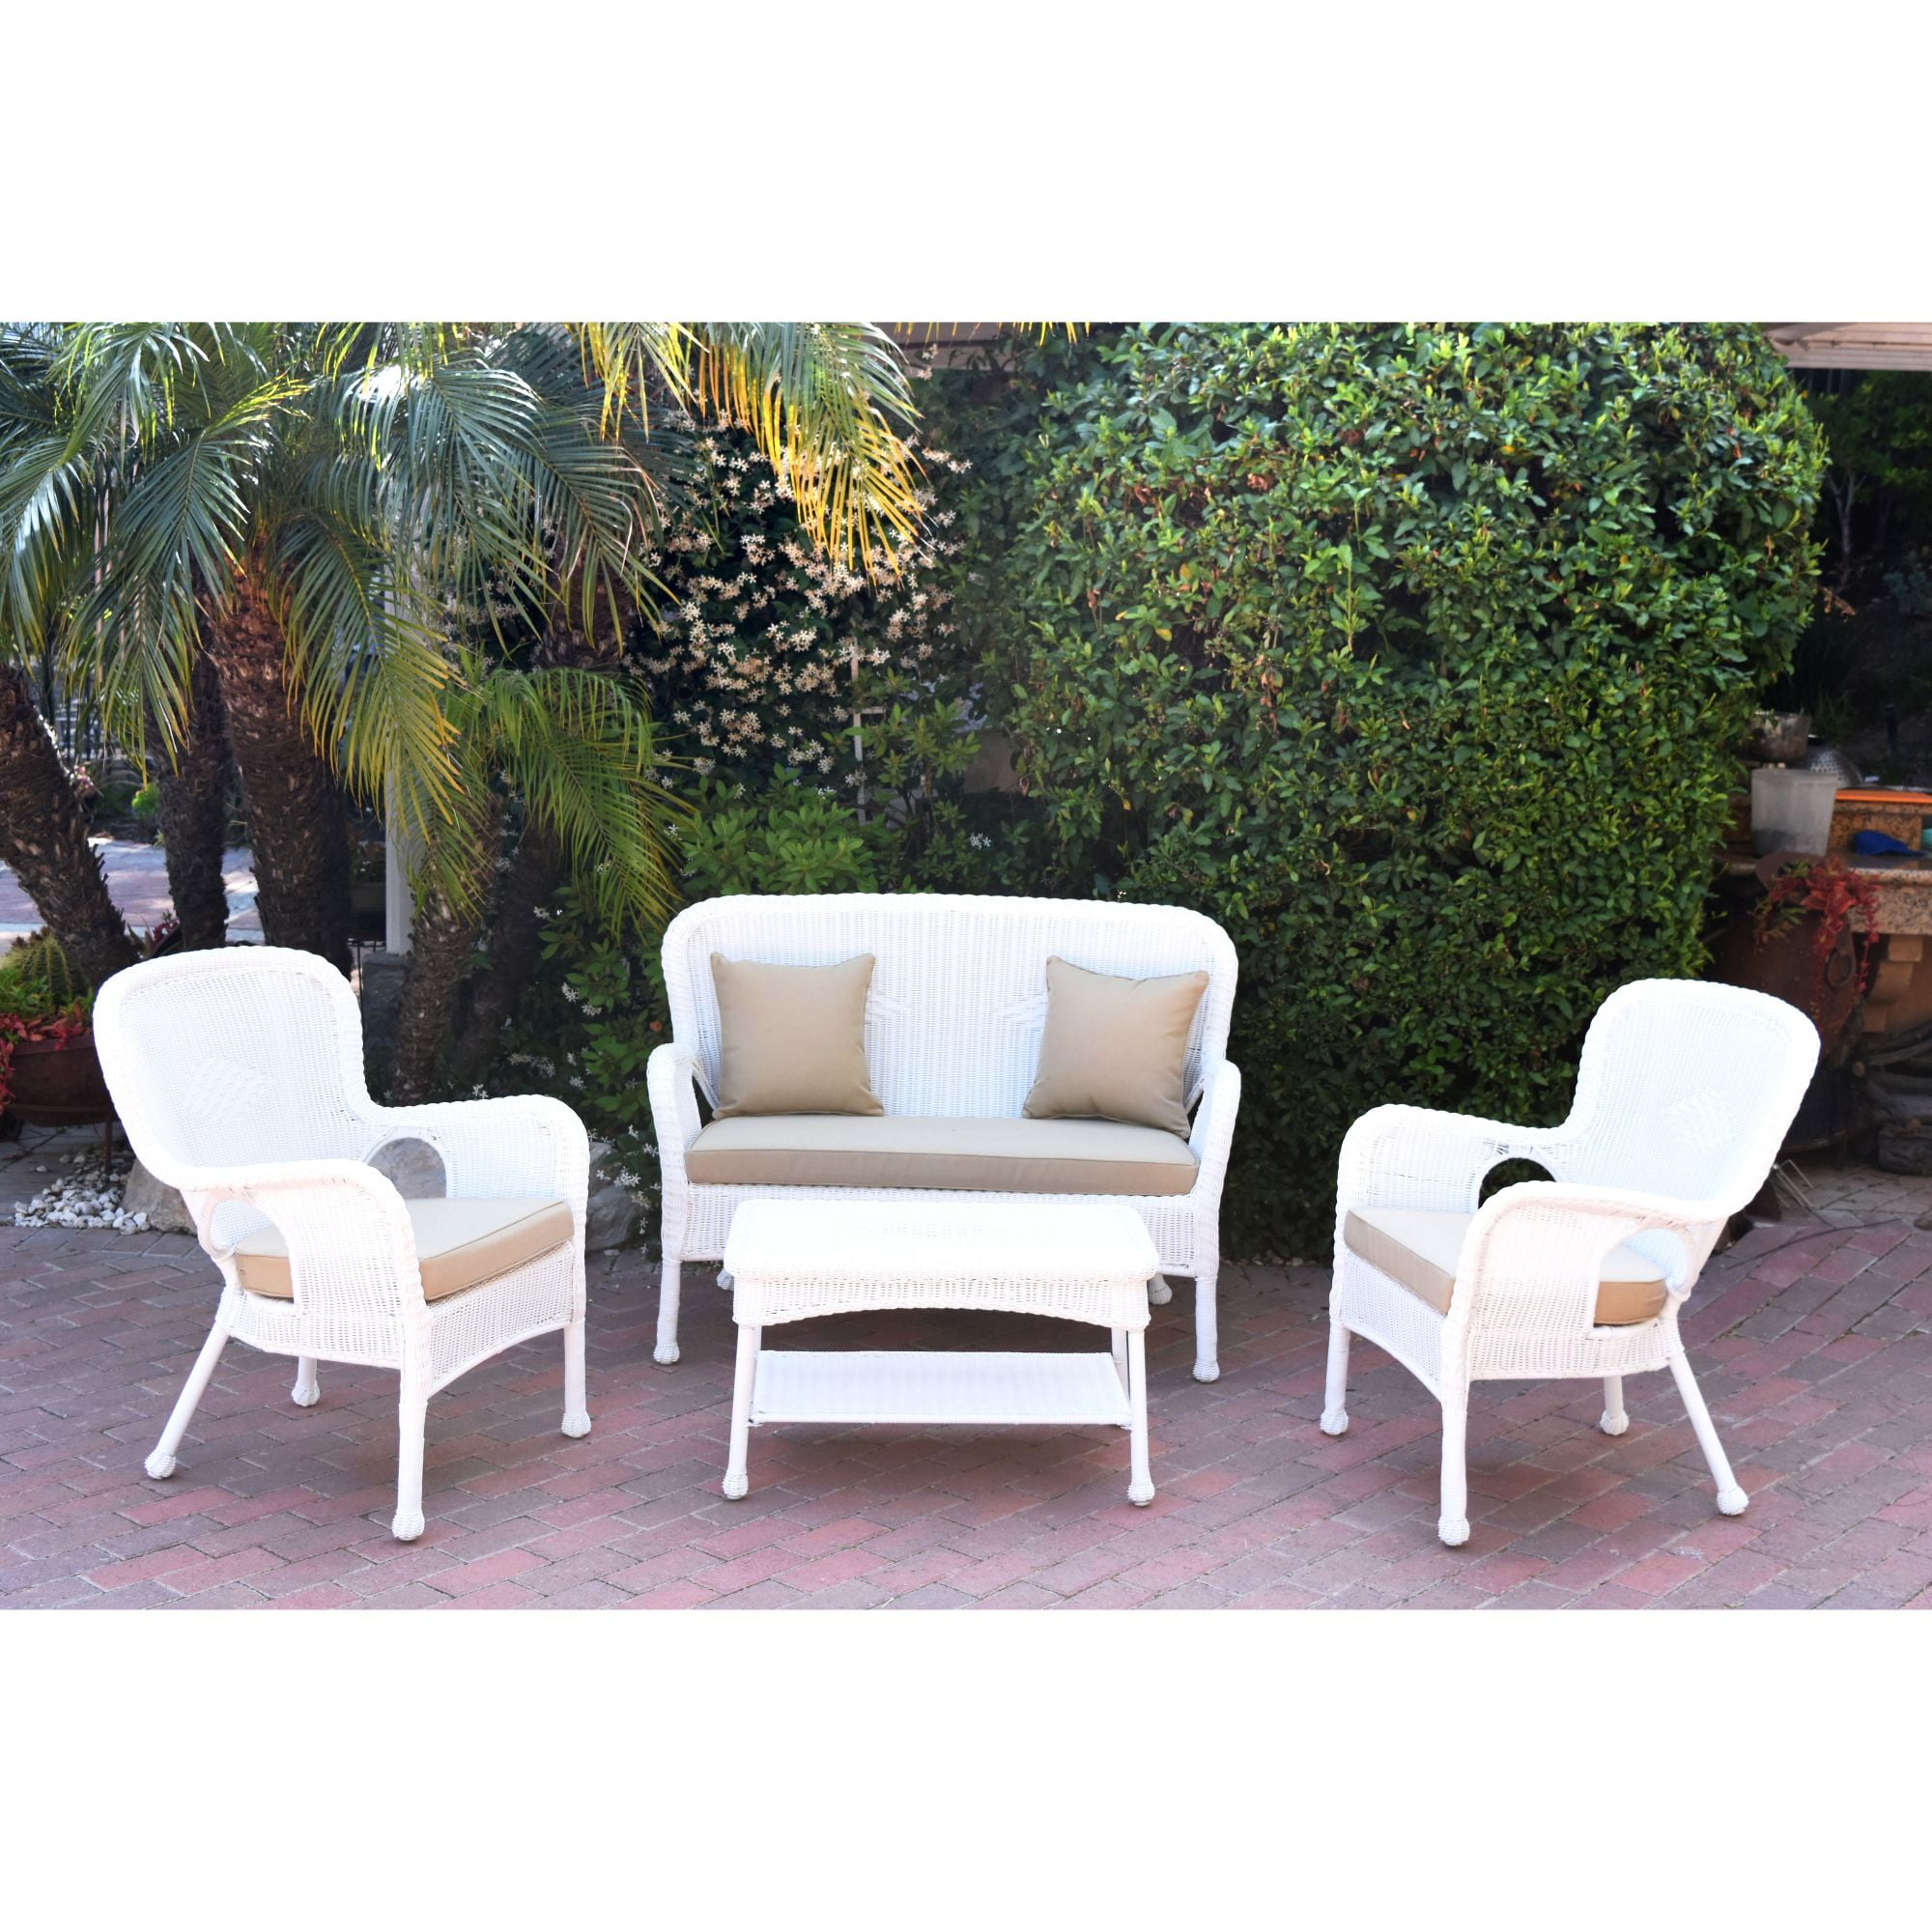 4-Piece White Wicker Outdoor Furniture Patio Conversation Set - Tan